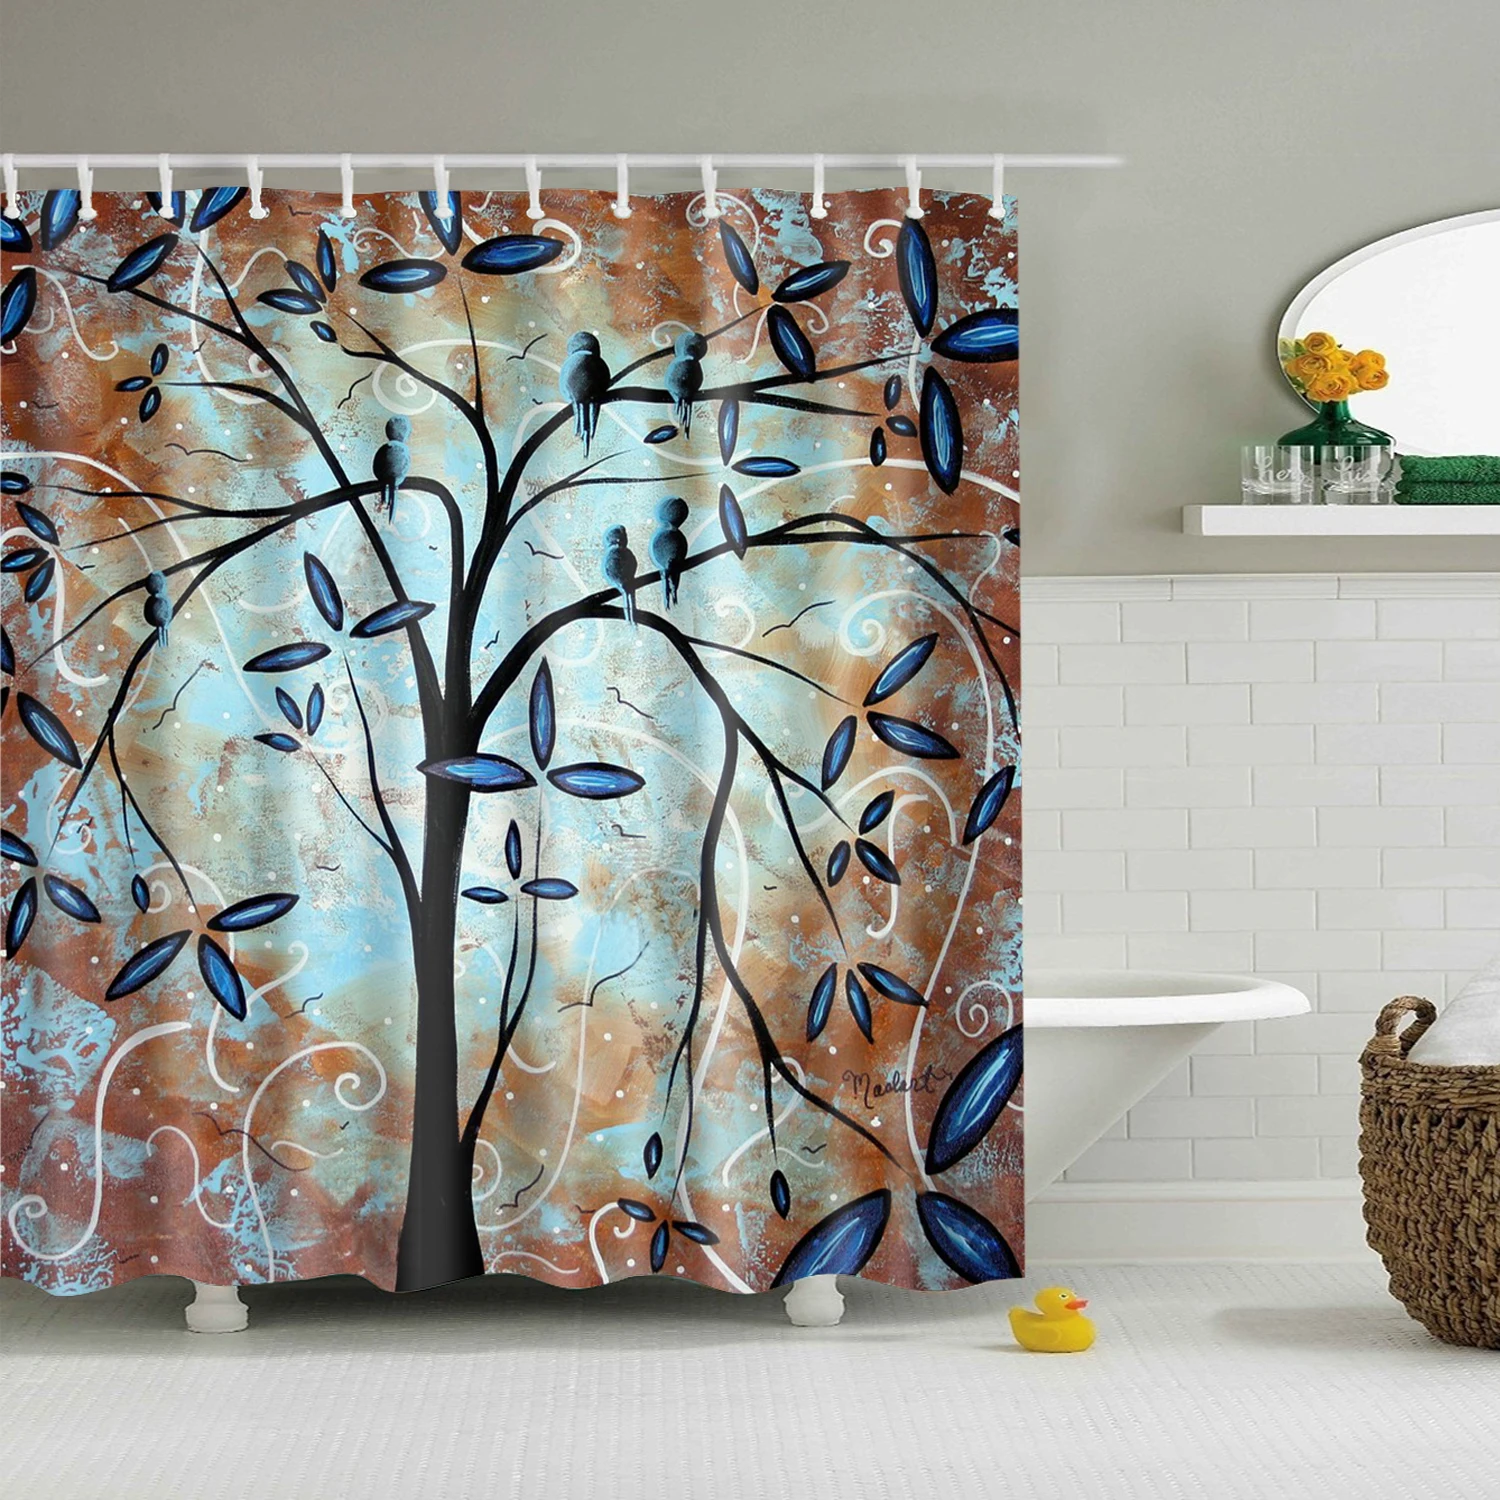 Oil painting print Shower Curtain Long 180x200cm Waterproof polyester blackout 3D print Bath curtain for bathroom curtain - Цвет: M